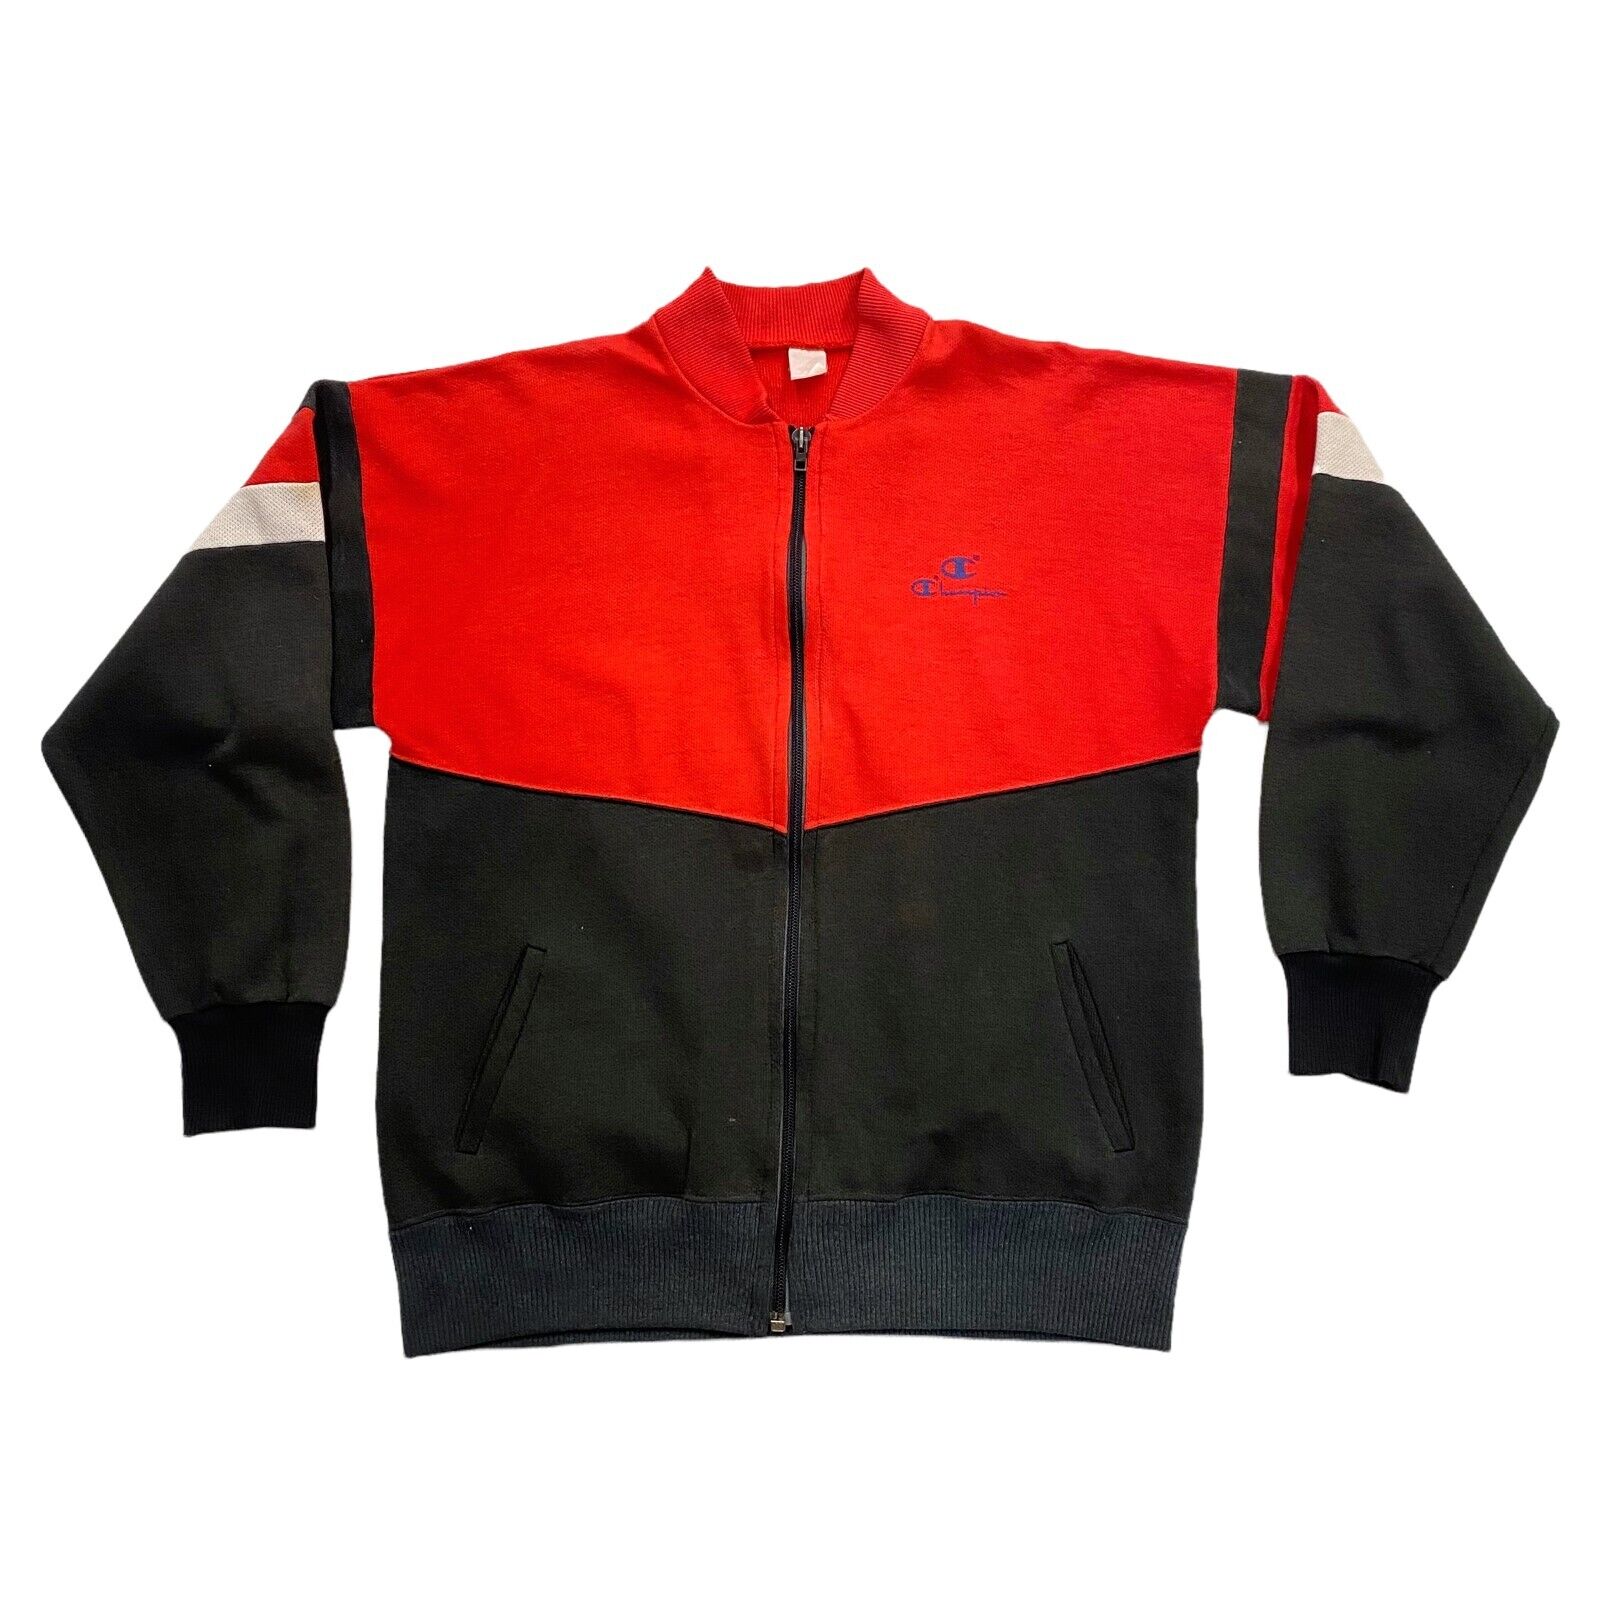 Champion Sweat Track Jacket, Vintage 80s Retro Sportswear Red Black VTG, Vintage & Second-Hand Clothing Online